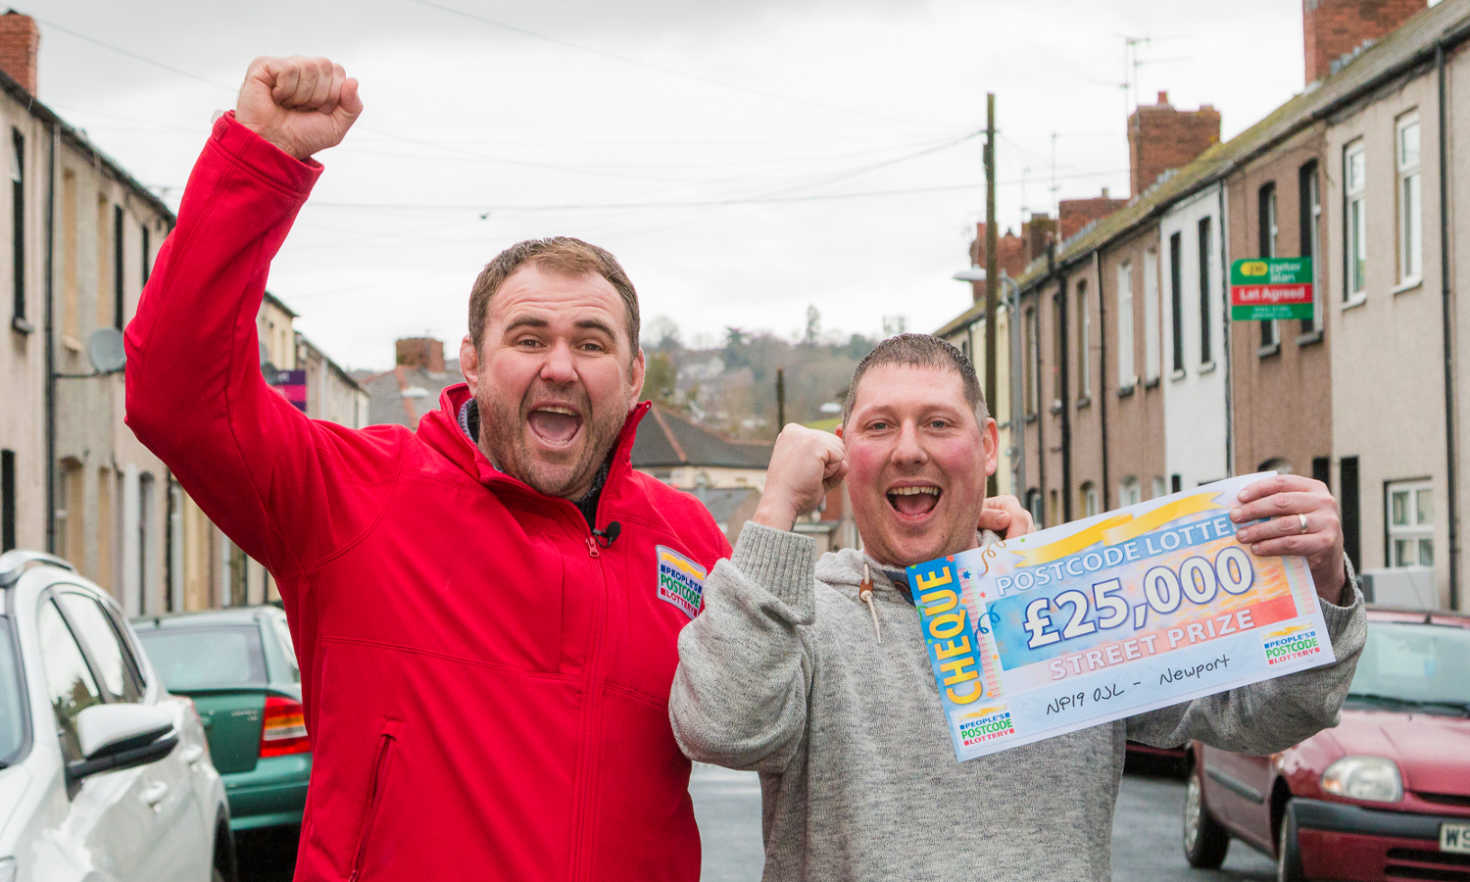 People's Postcode Lottery presenter Scott Quinnell and lucky Newport winner Carl Morgan